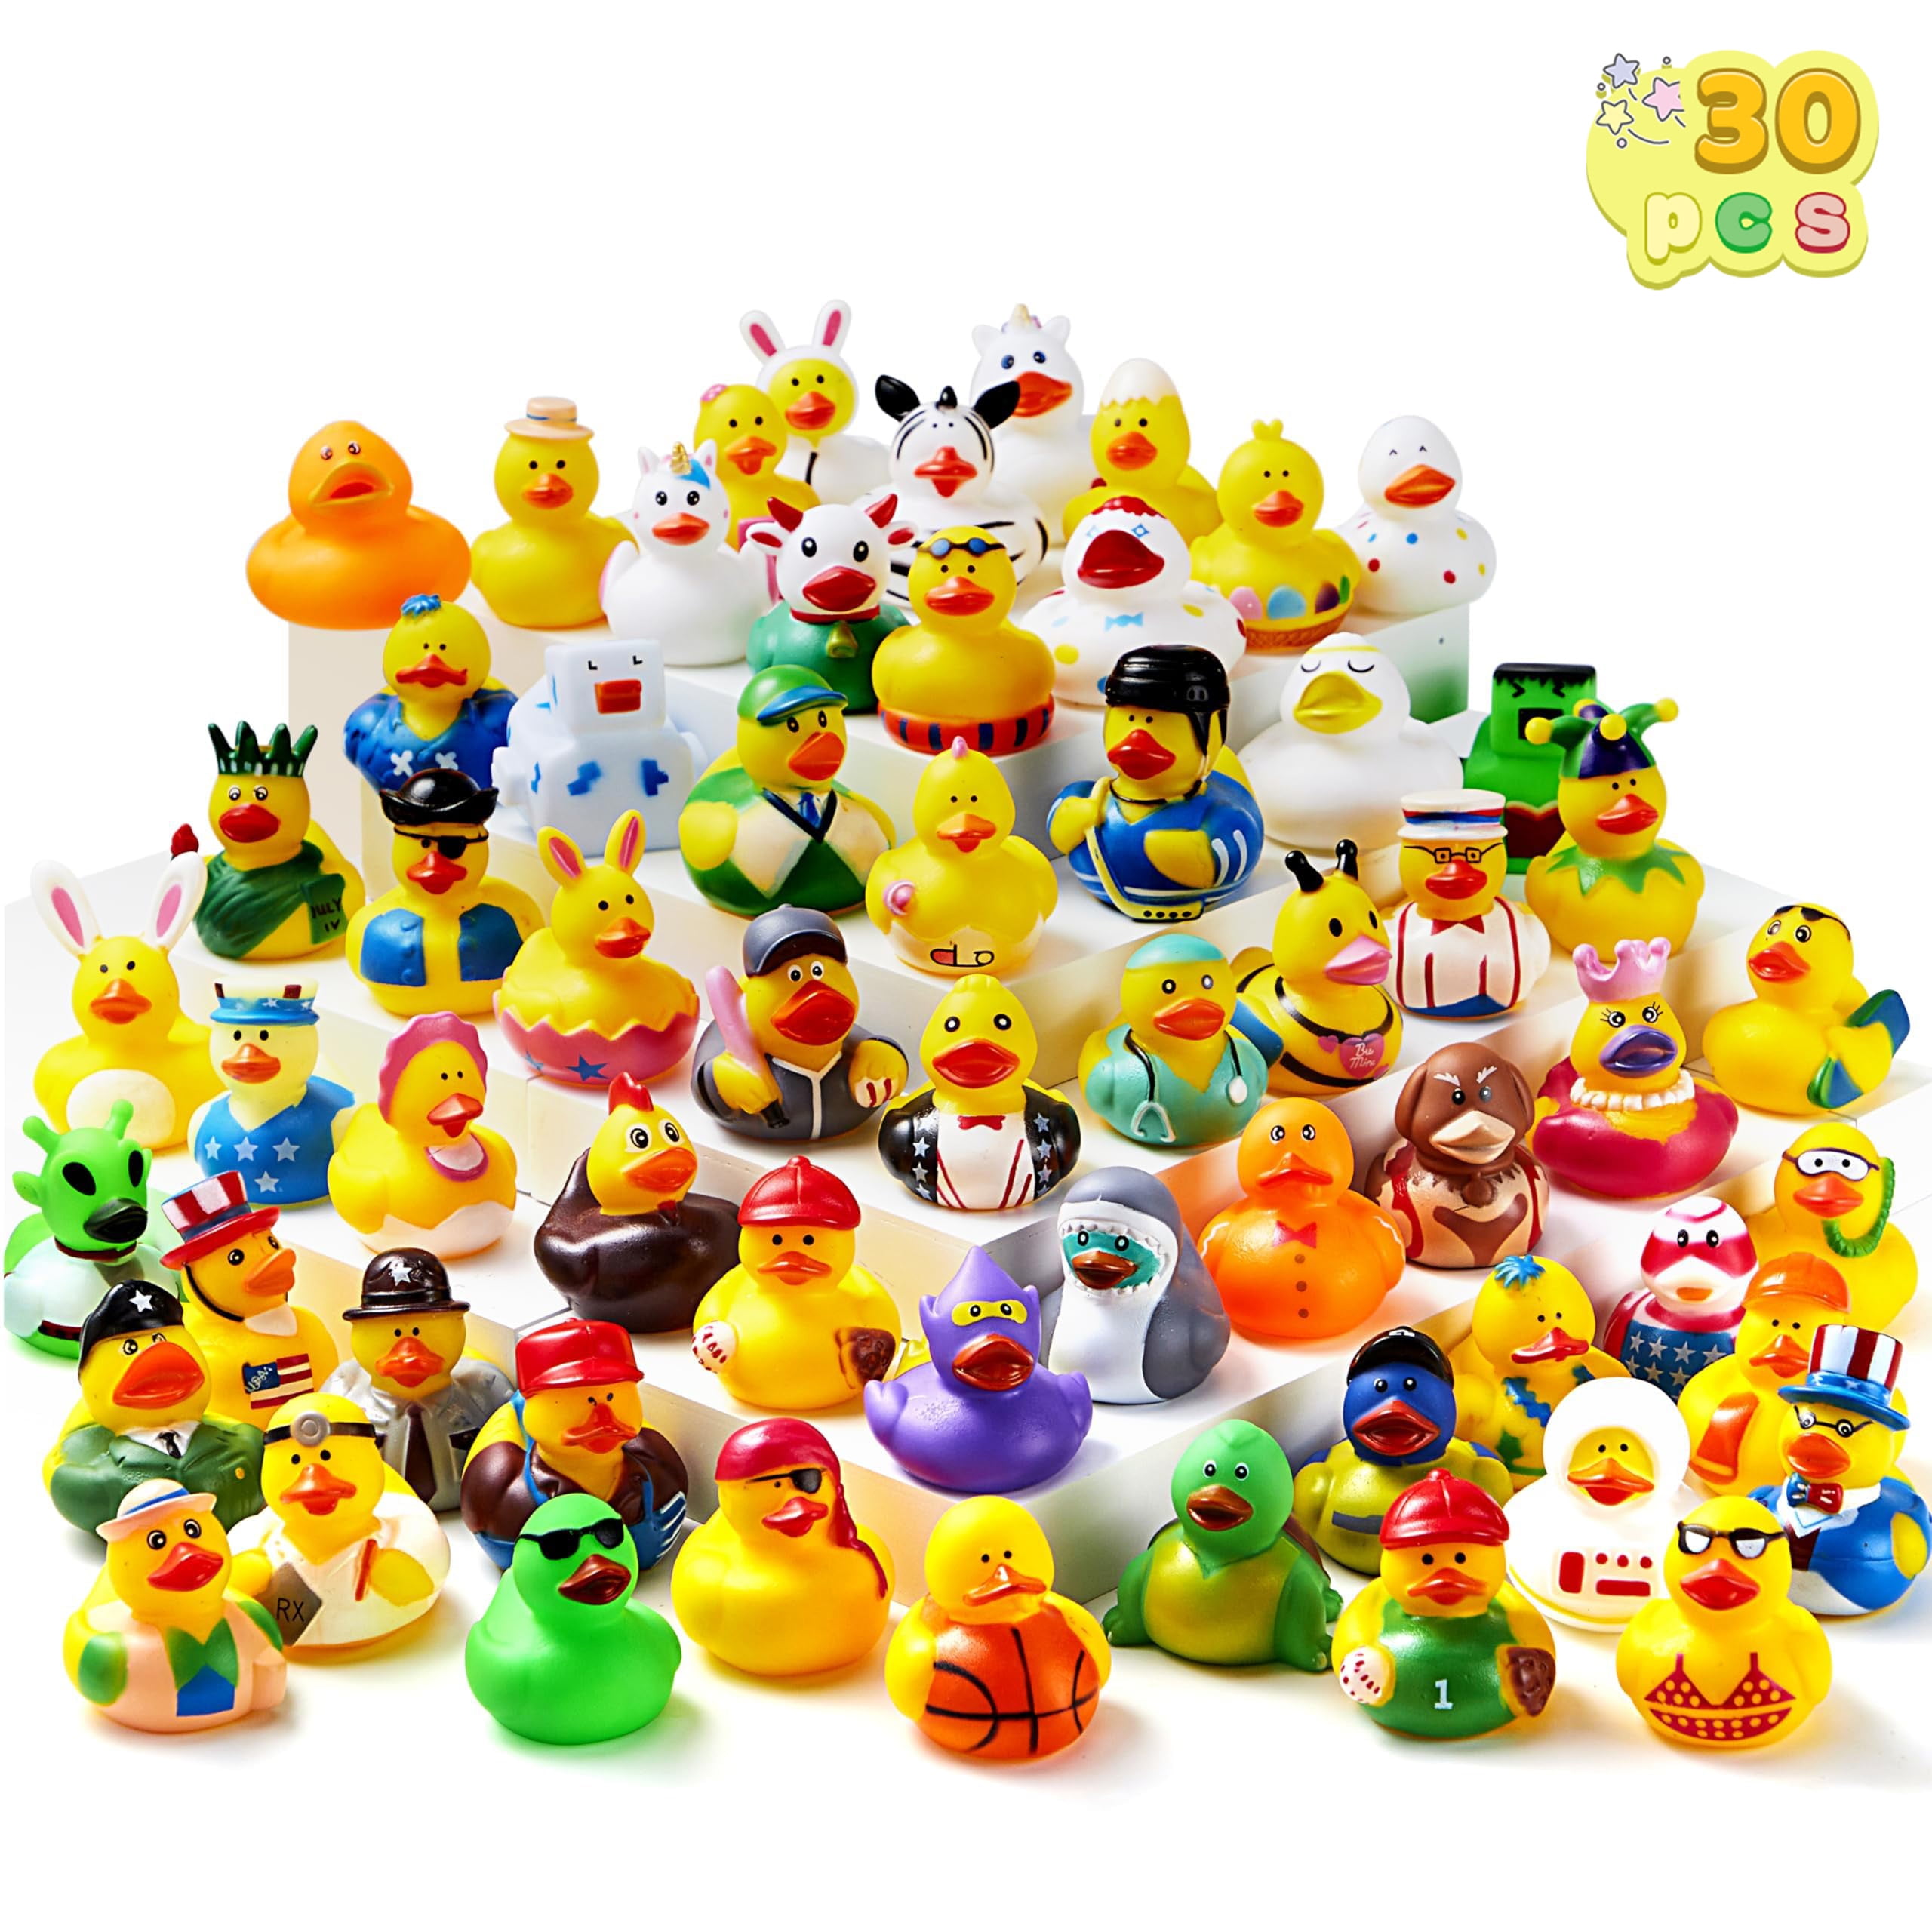 Mini Rubber Ducks with Fishing Net - Bathtime Fun! - The Home Fusion Company